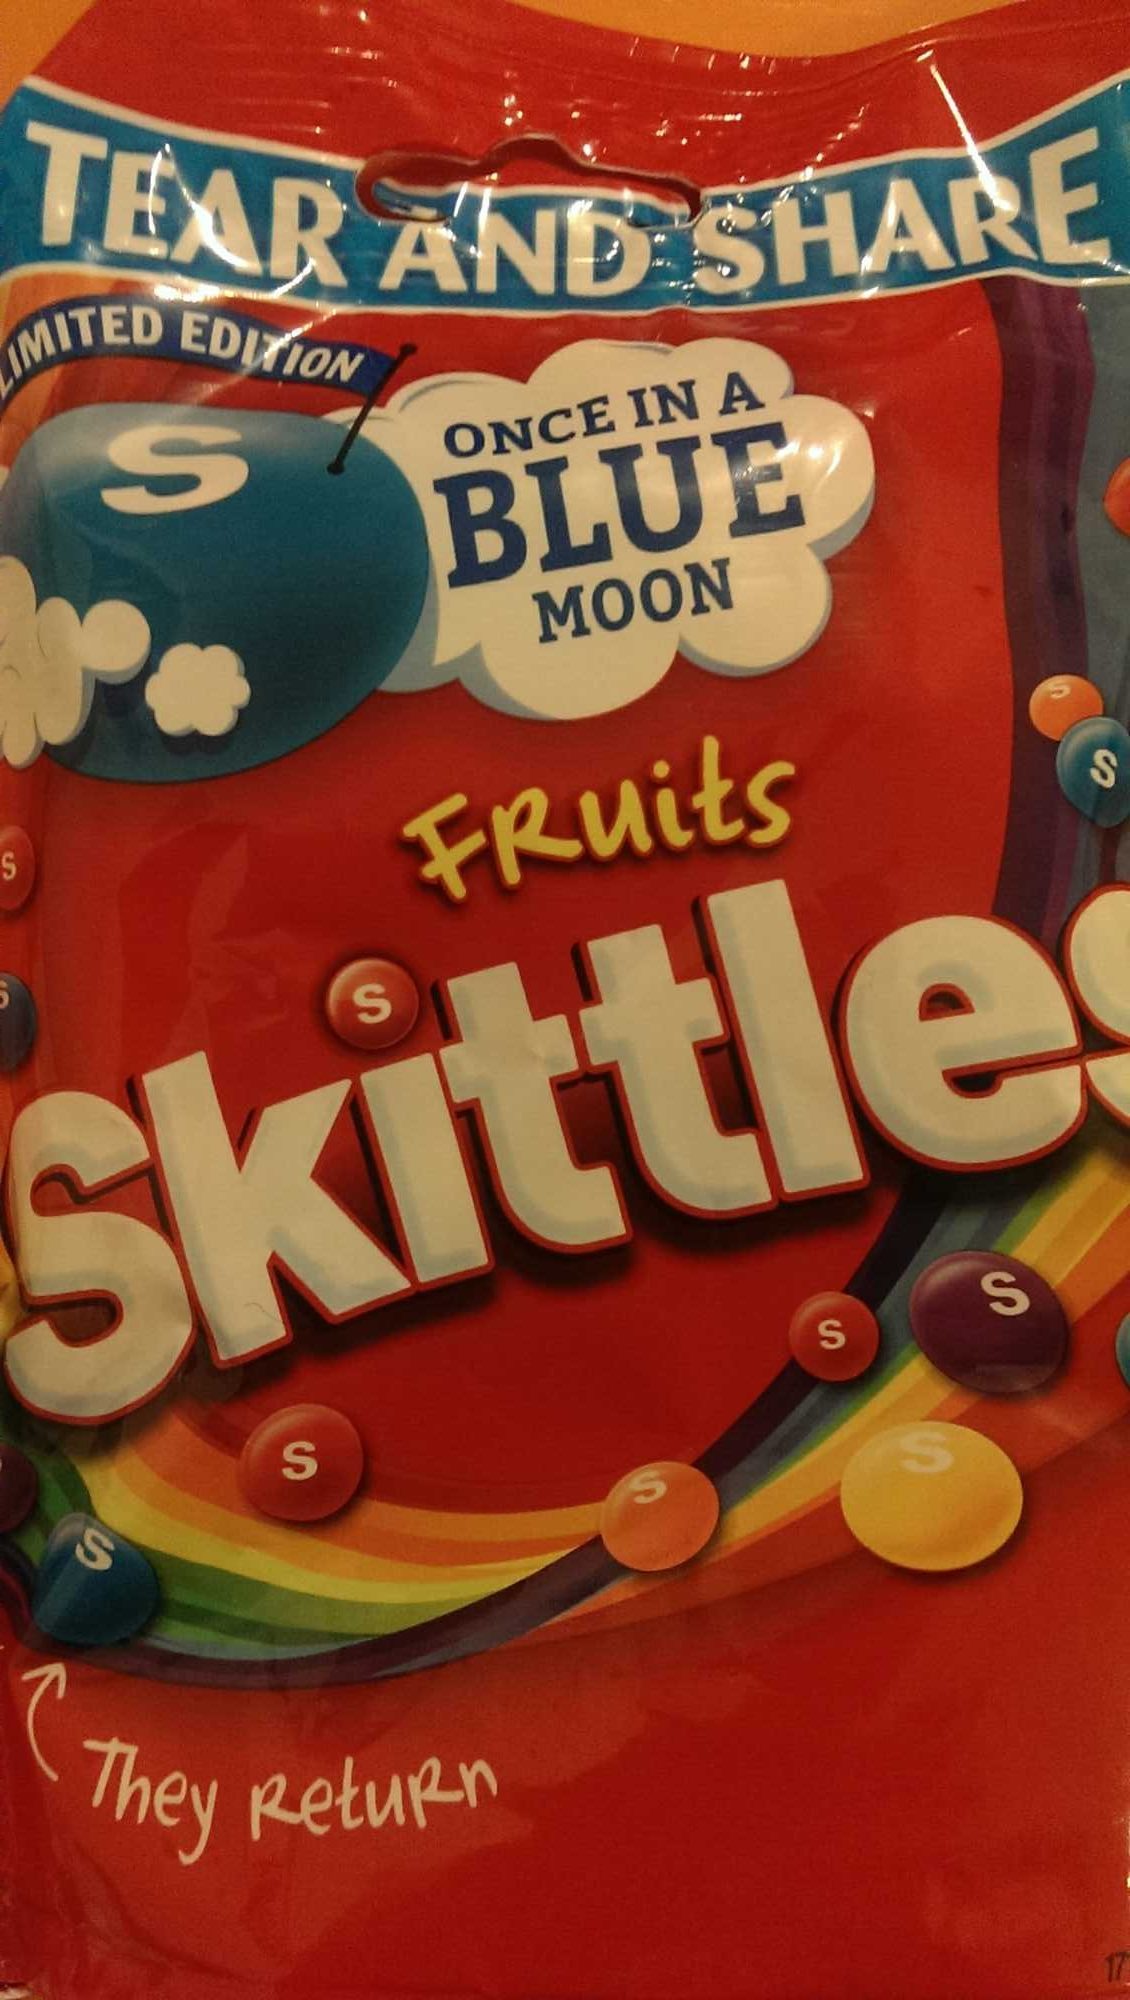 Skittles fruits - Product - en